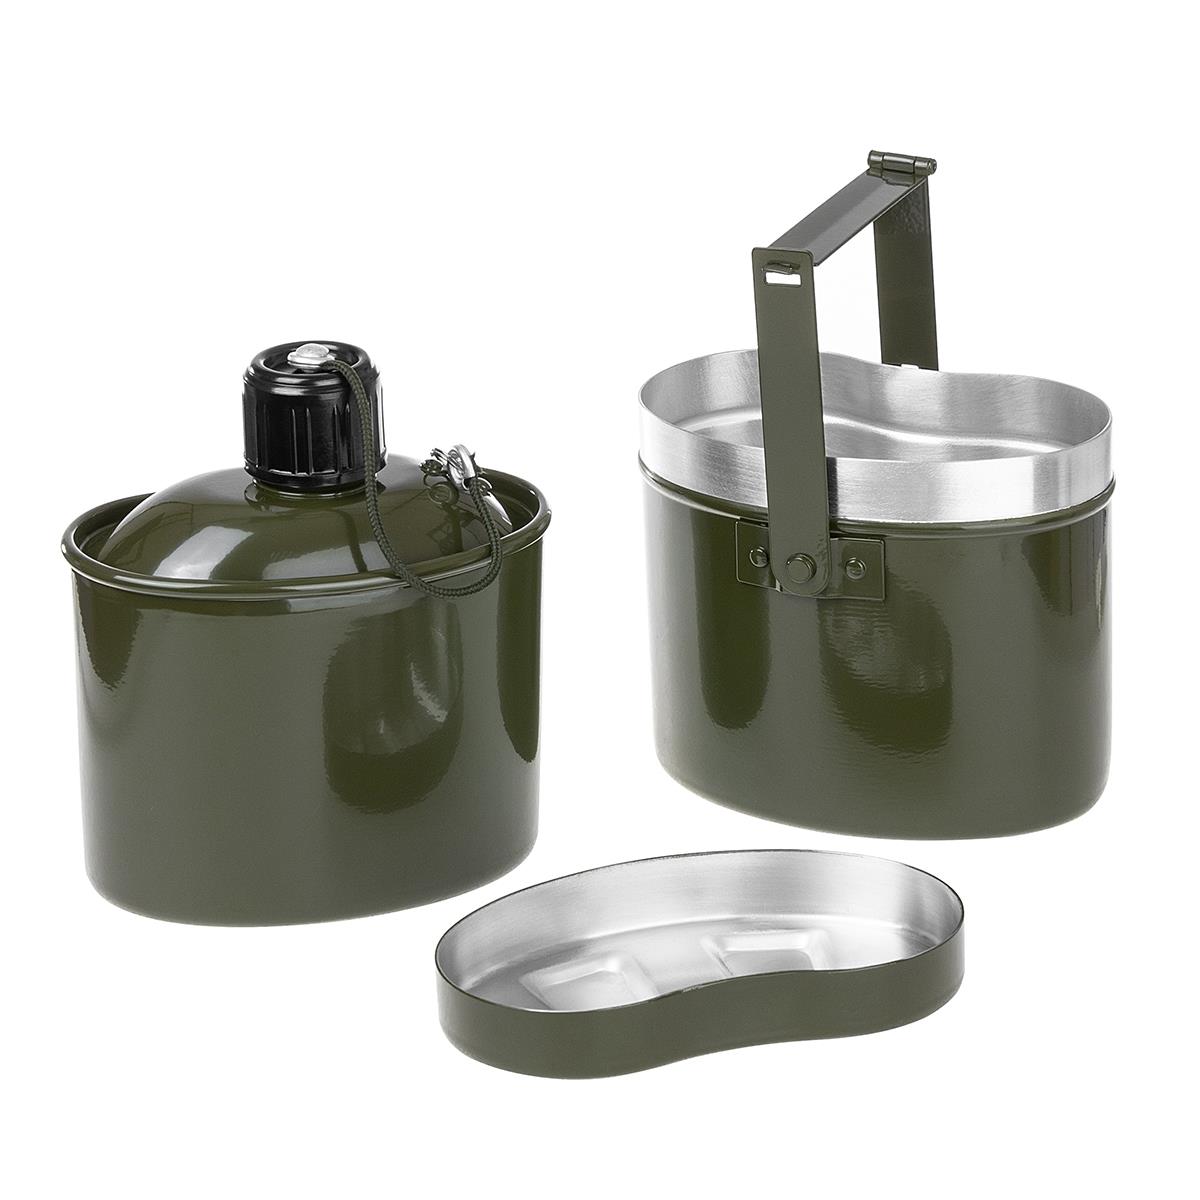 Набор посуды армейский котелок+фляжка (1000мл/900мл) HS-NP 020031-00 Helios набор для рисования на воде в технике эбру